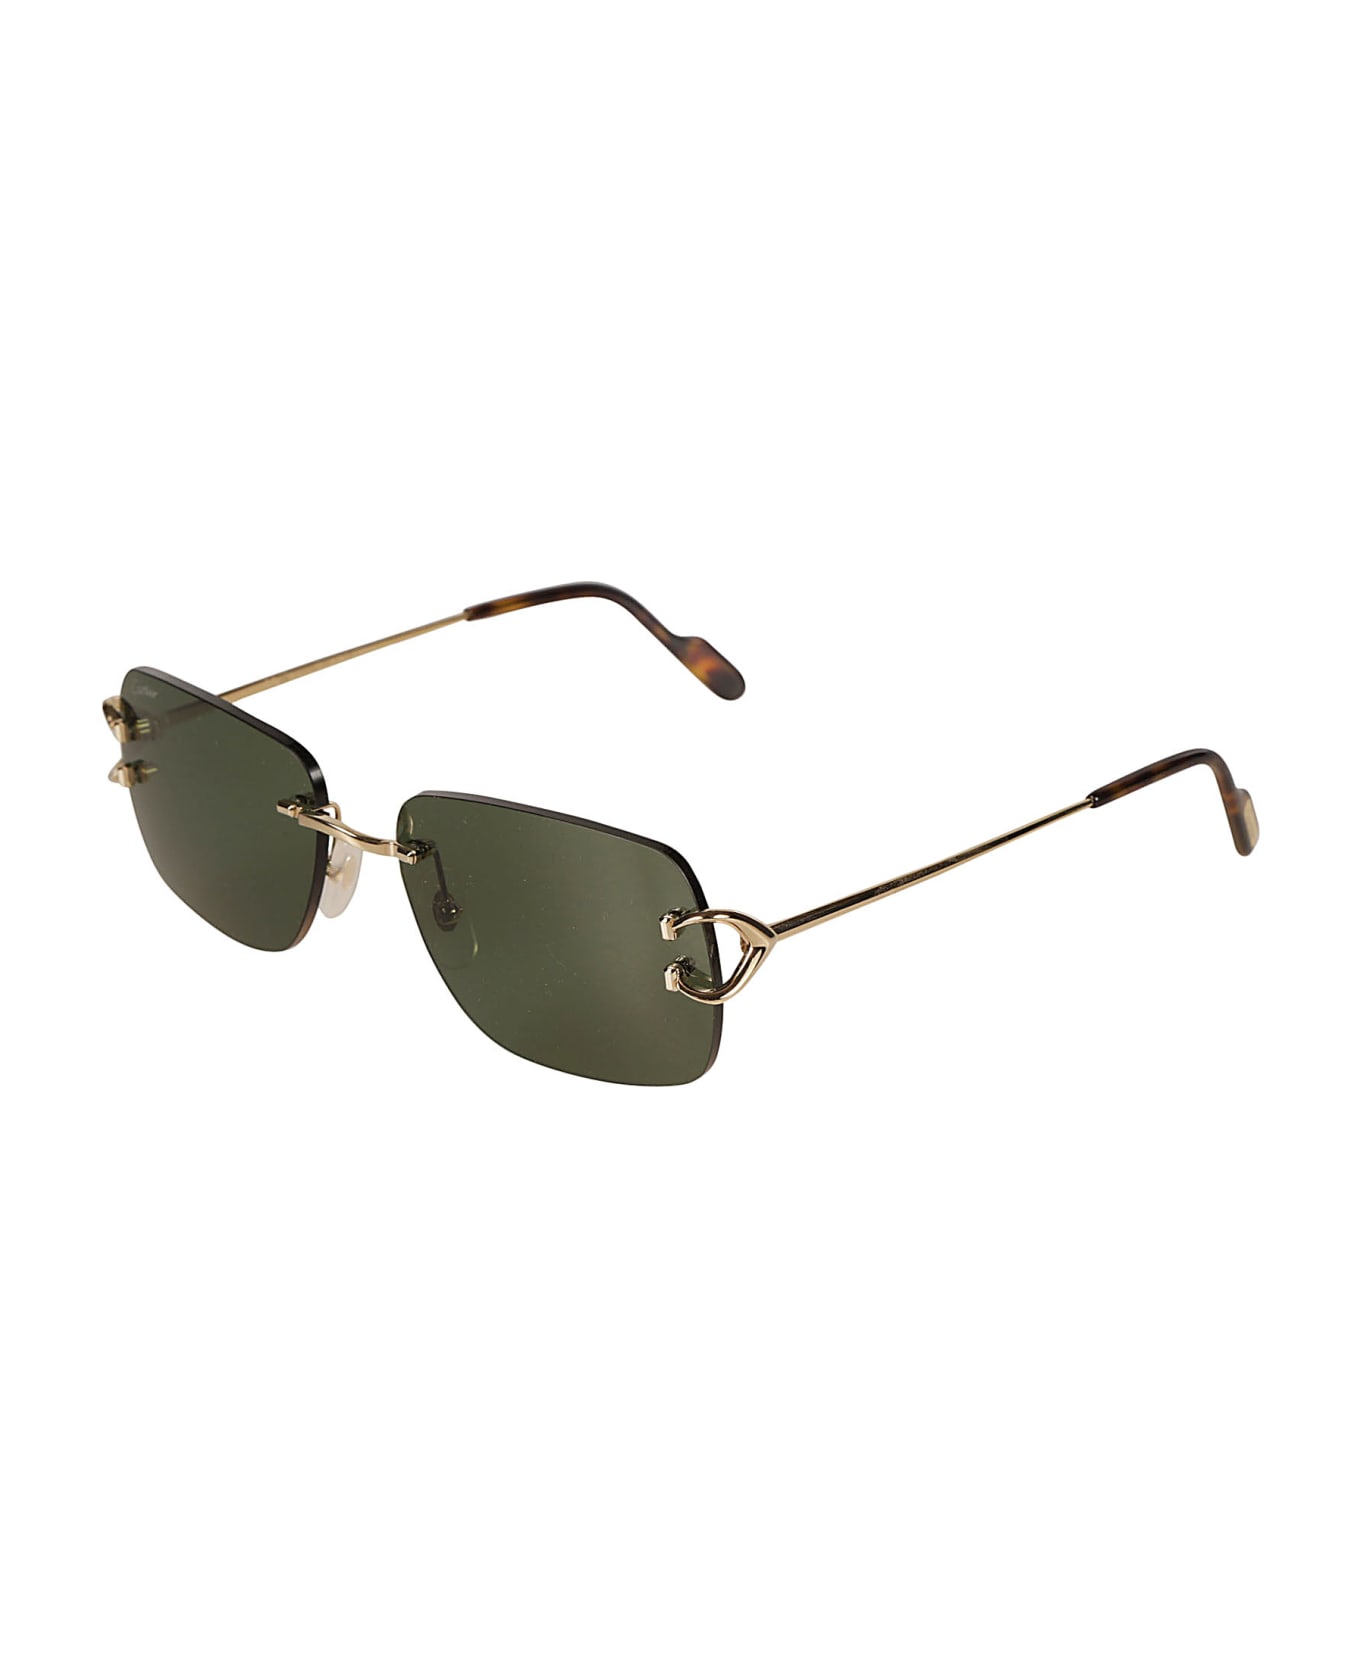 Cartier Eyewear Frame-less Square Sunglasses Sunglasses - Gold/Green